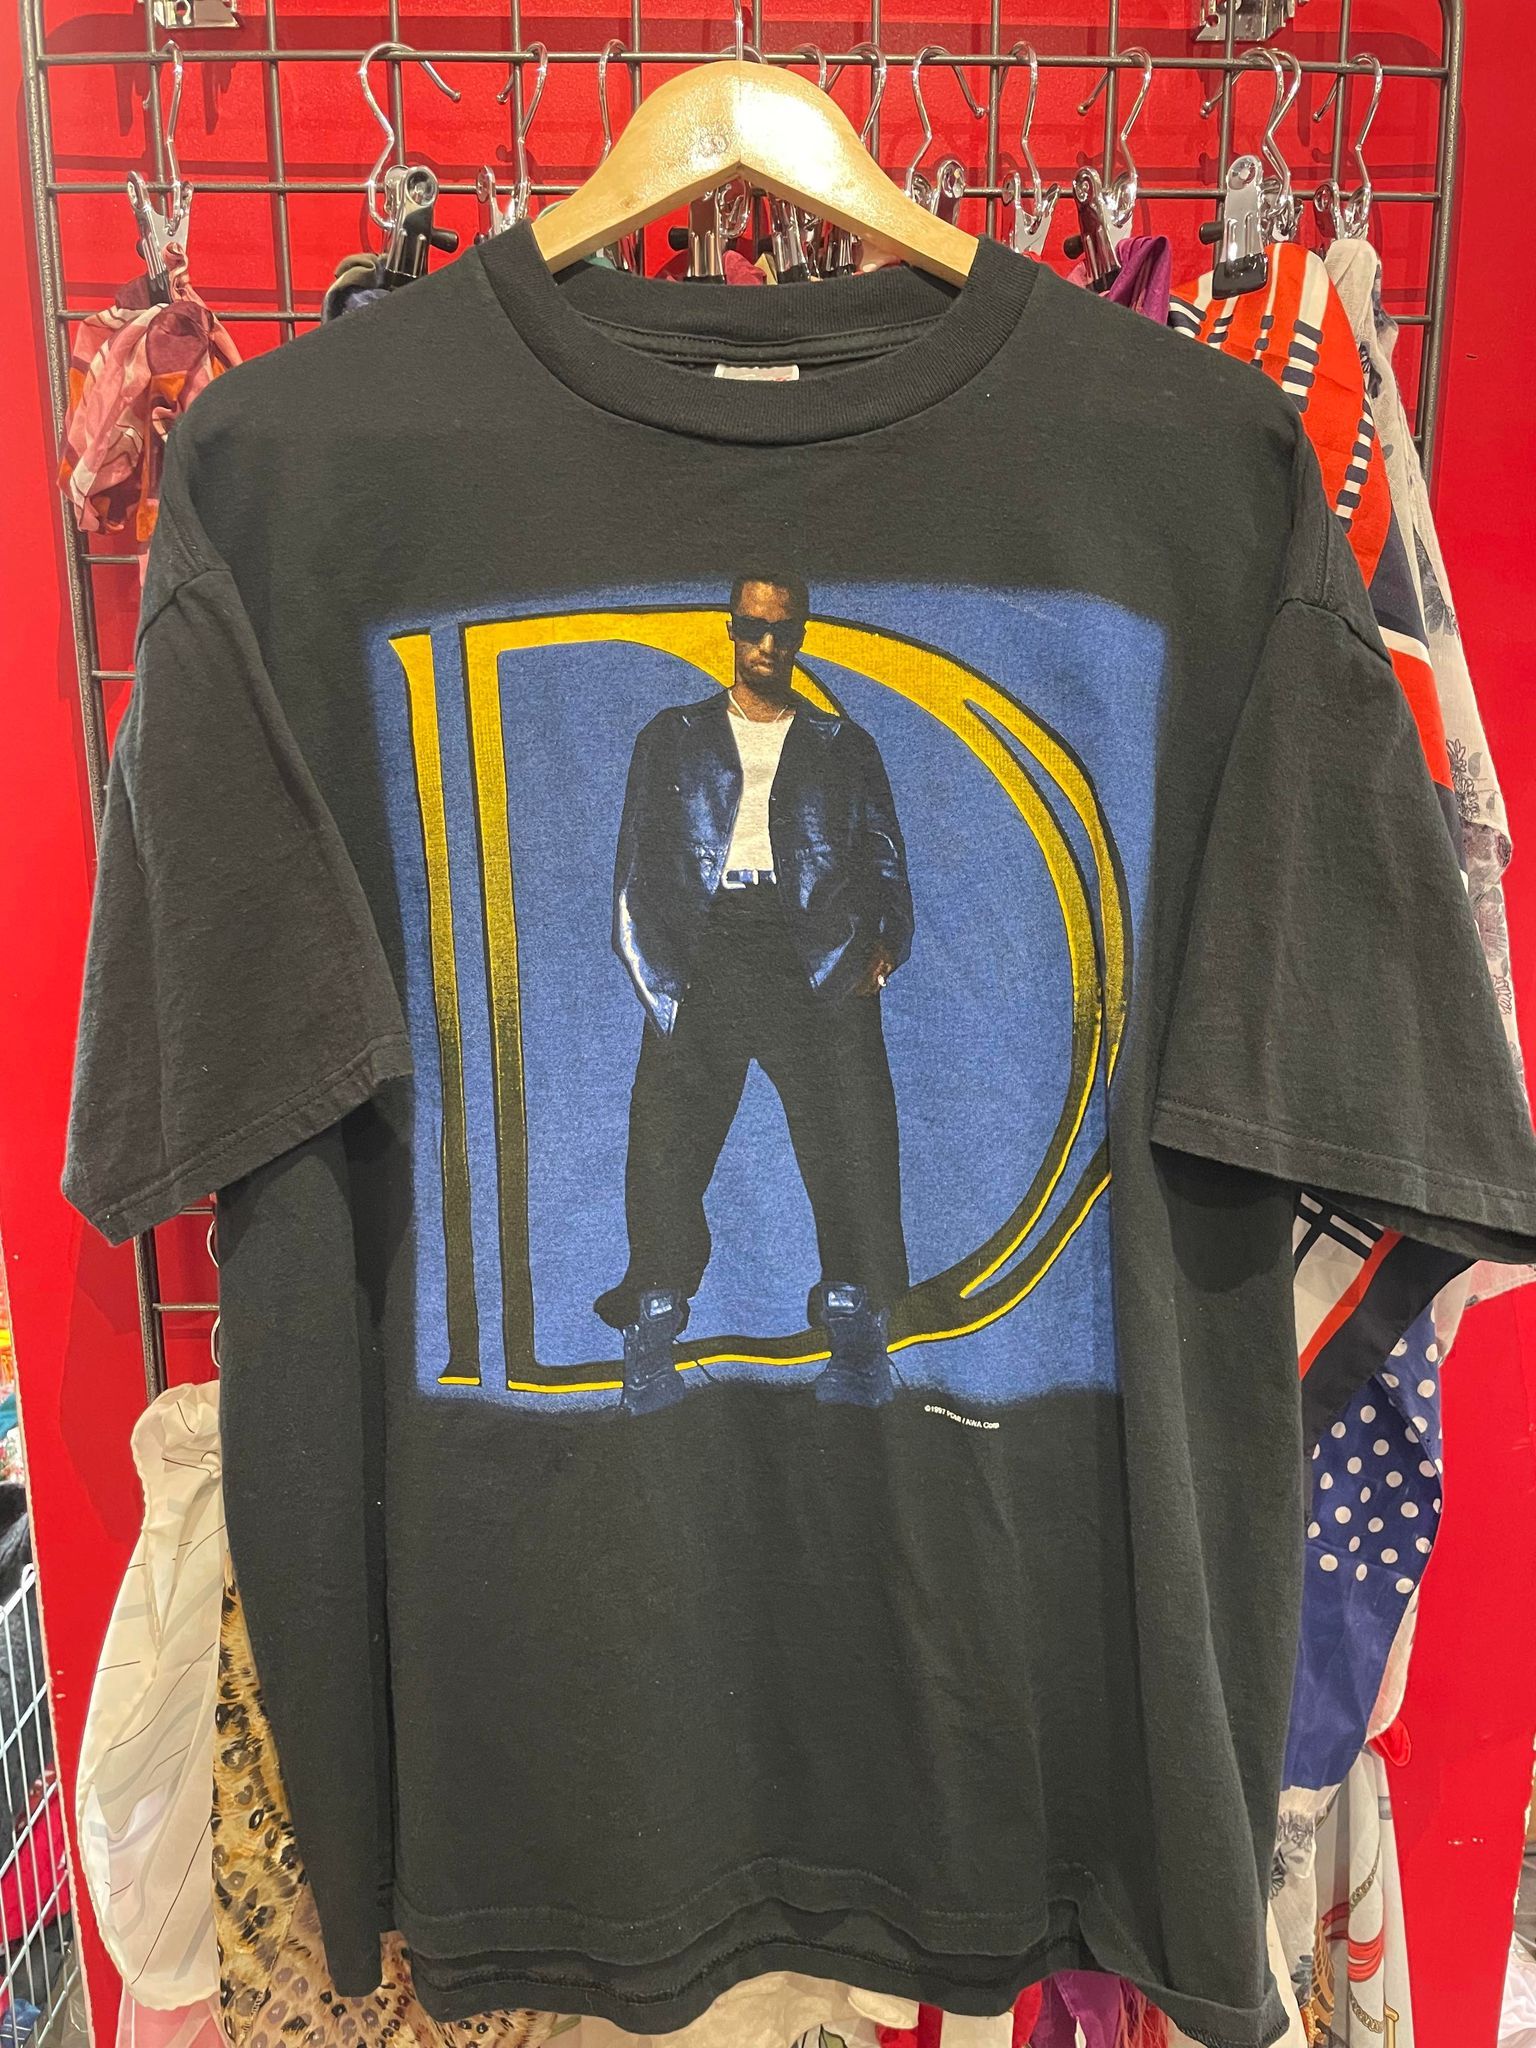 Vintage 1997 Puff Daddy Diddy Rap Tee T-Shirt Size Men's XL